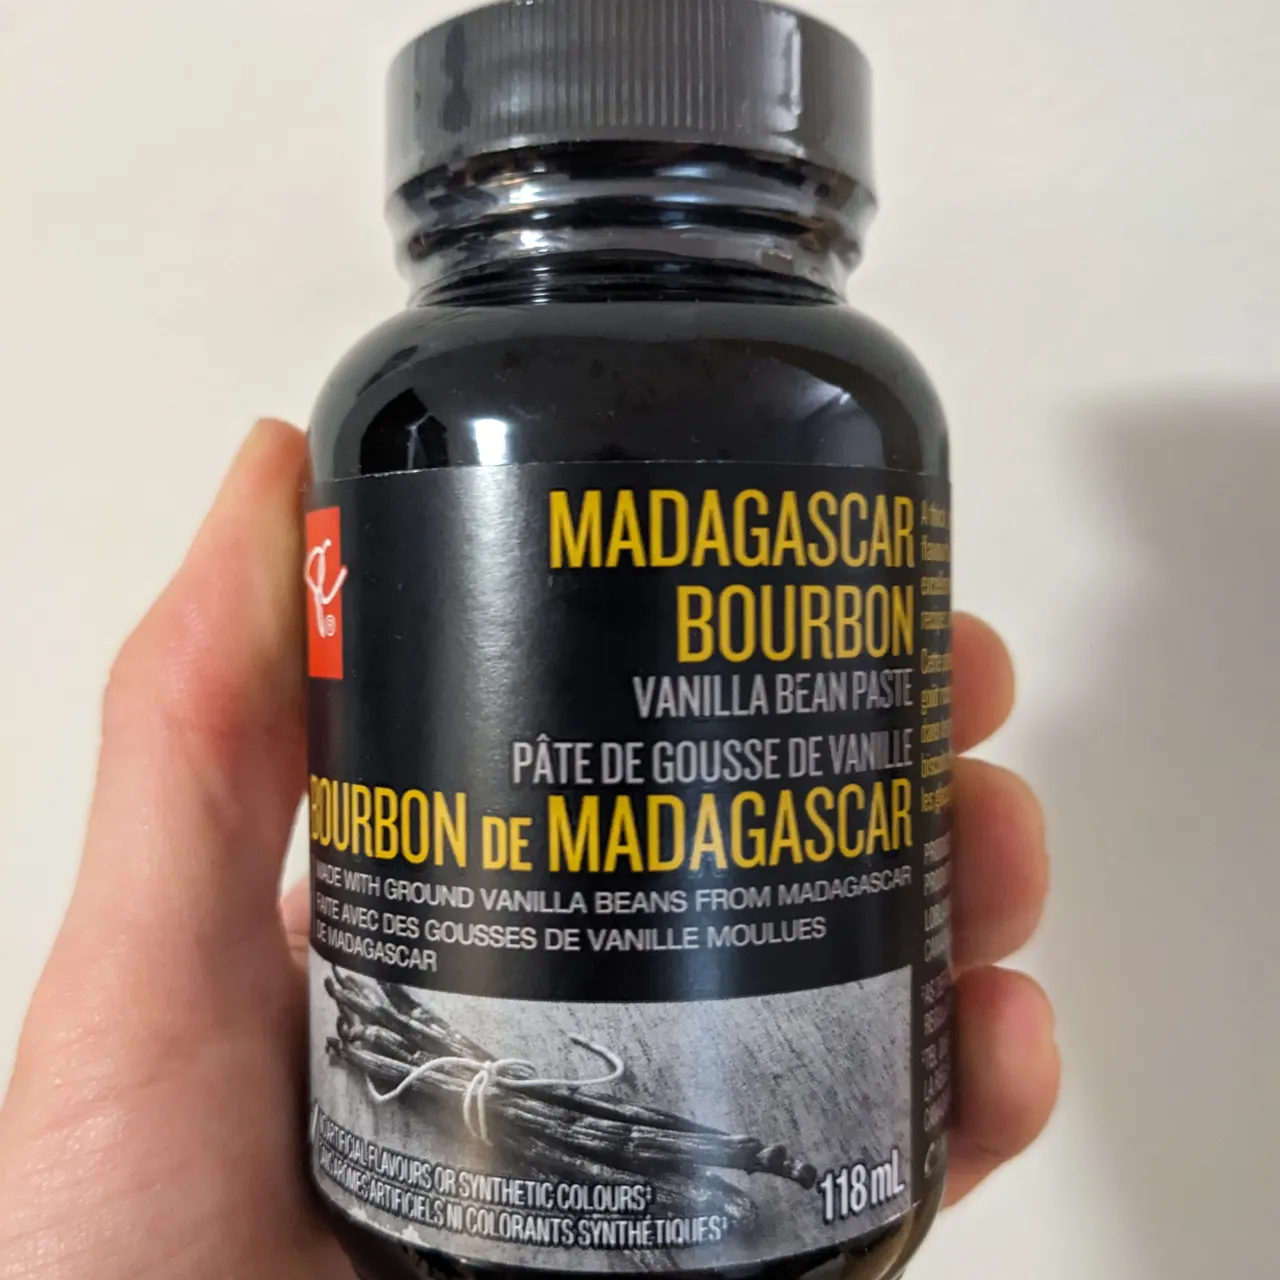 Madagascar Bourbon Vanilla Bean Paste photo 1